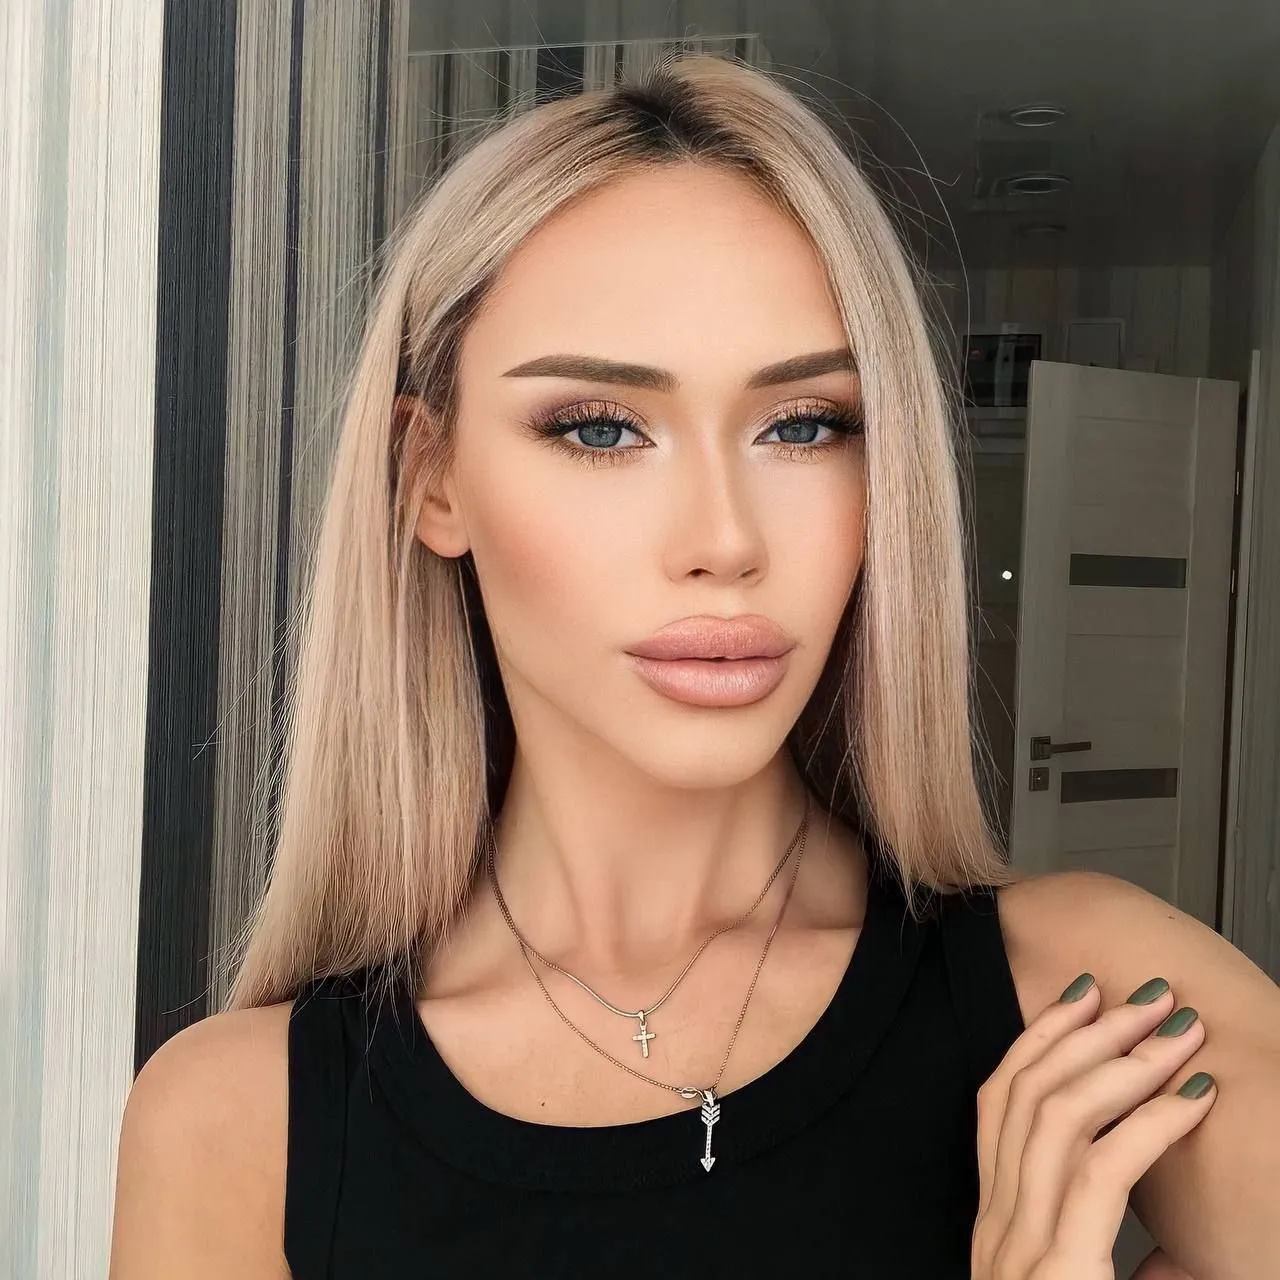 Yulia russian dating free chat